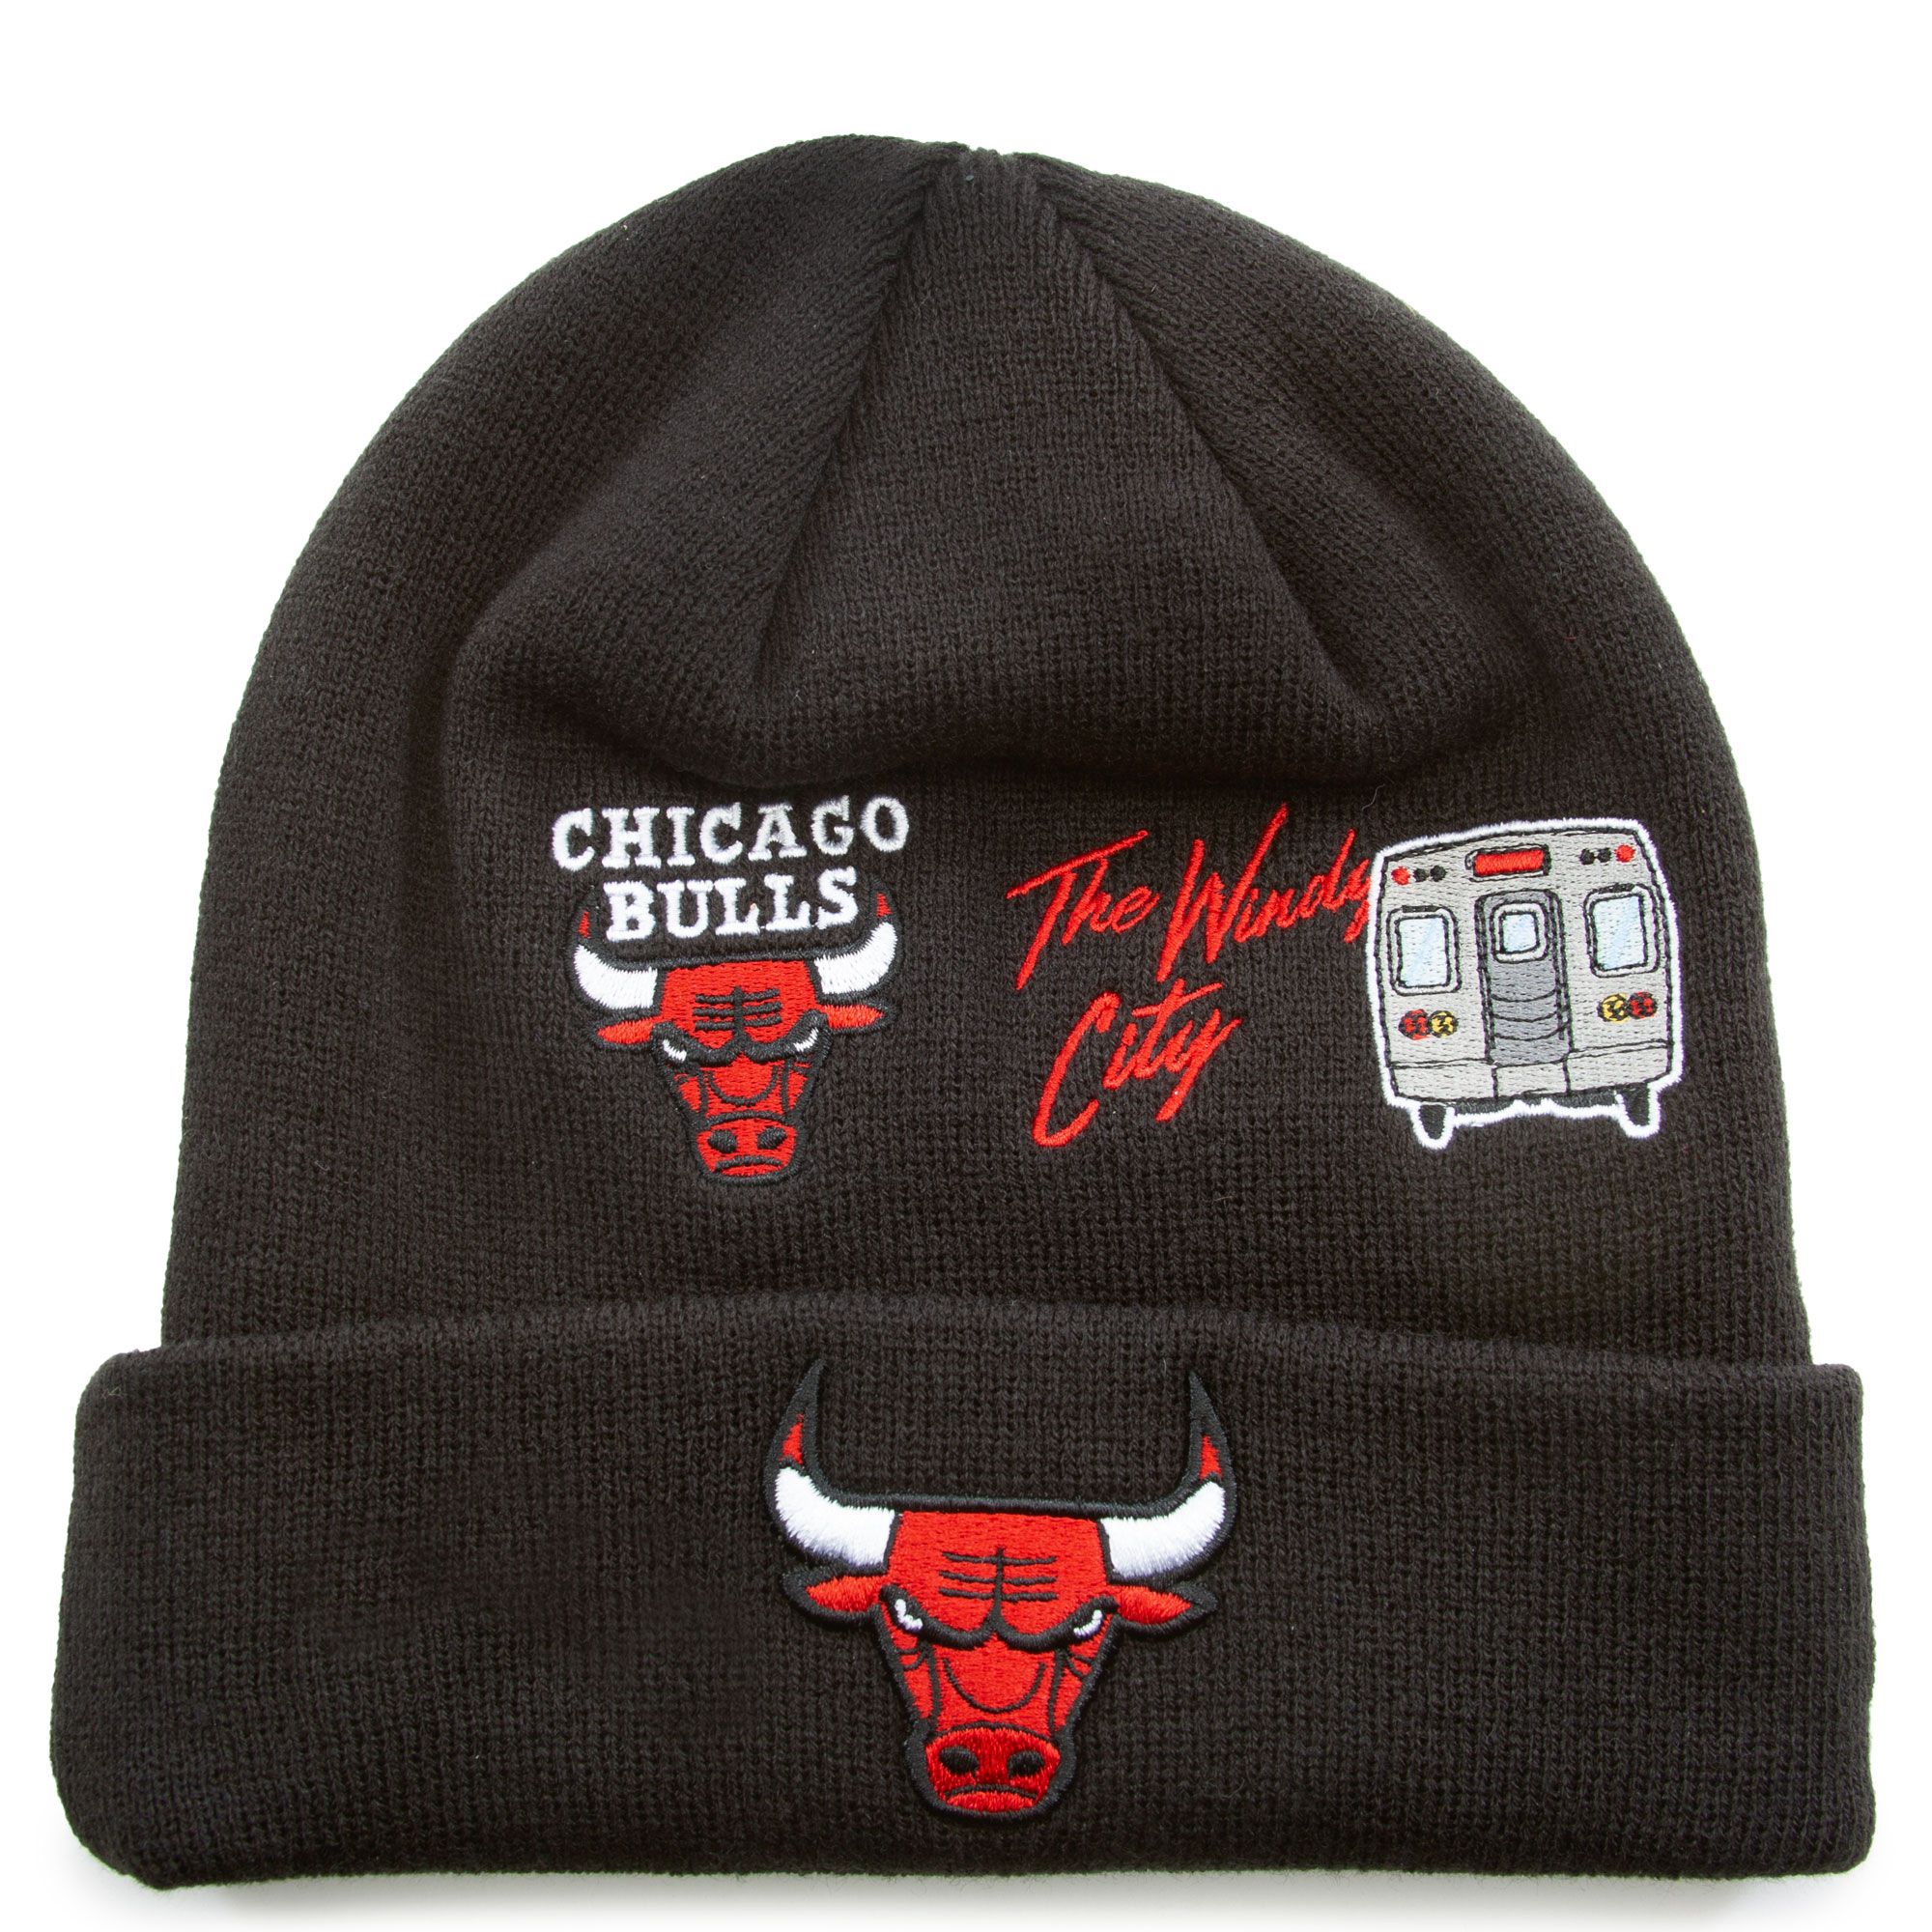 Chicago Bulls STRIPEOUT Knit Beanie Hat by New Era